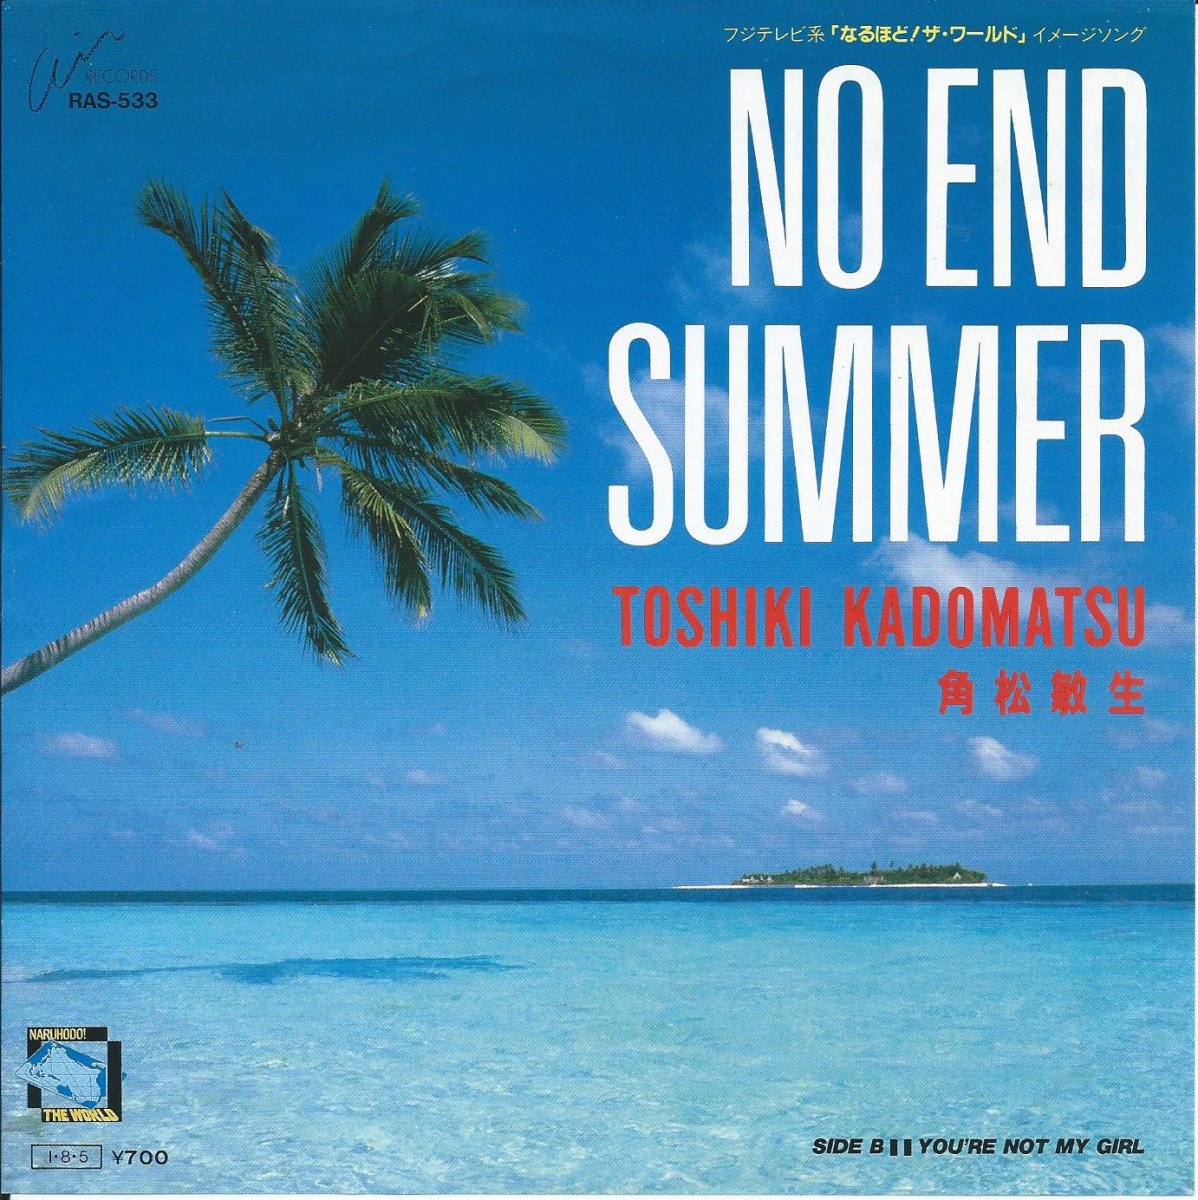 角松敏生 TOSHIKI KADOMATSU / NO END SUMMER / YOU'RE NOT MY GIRL (7